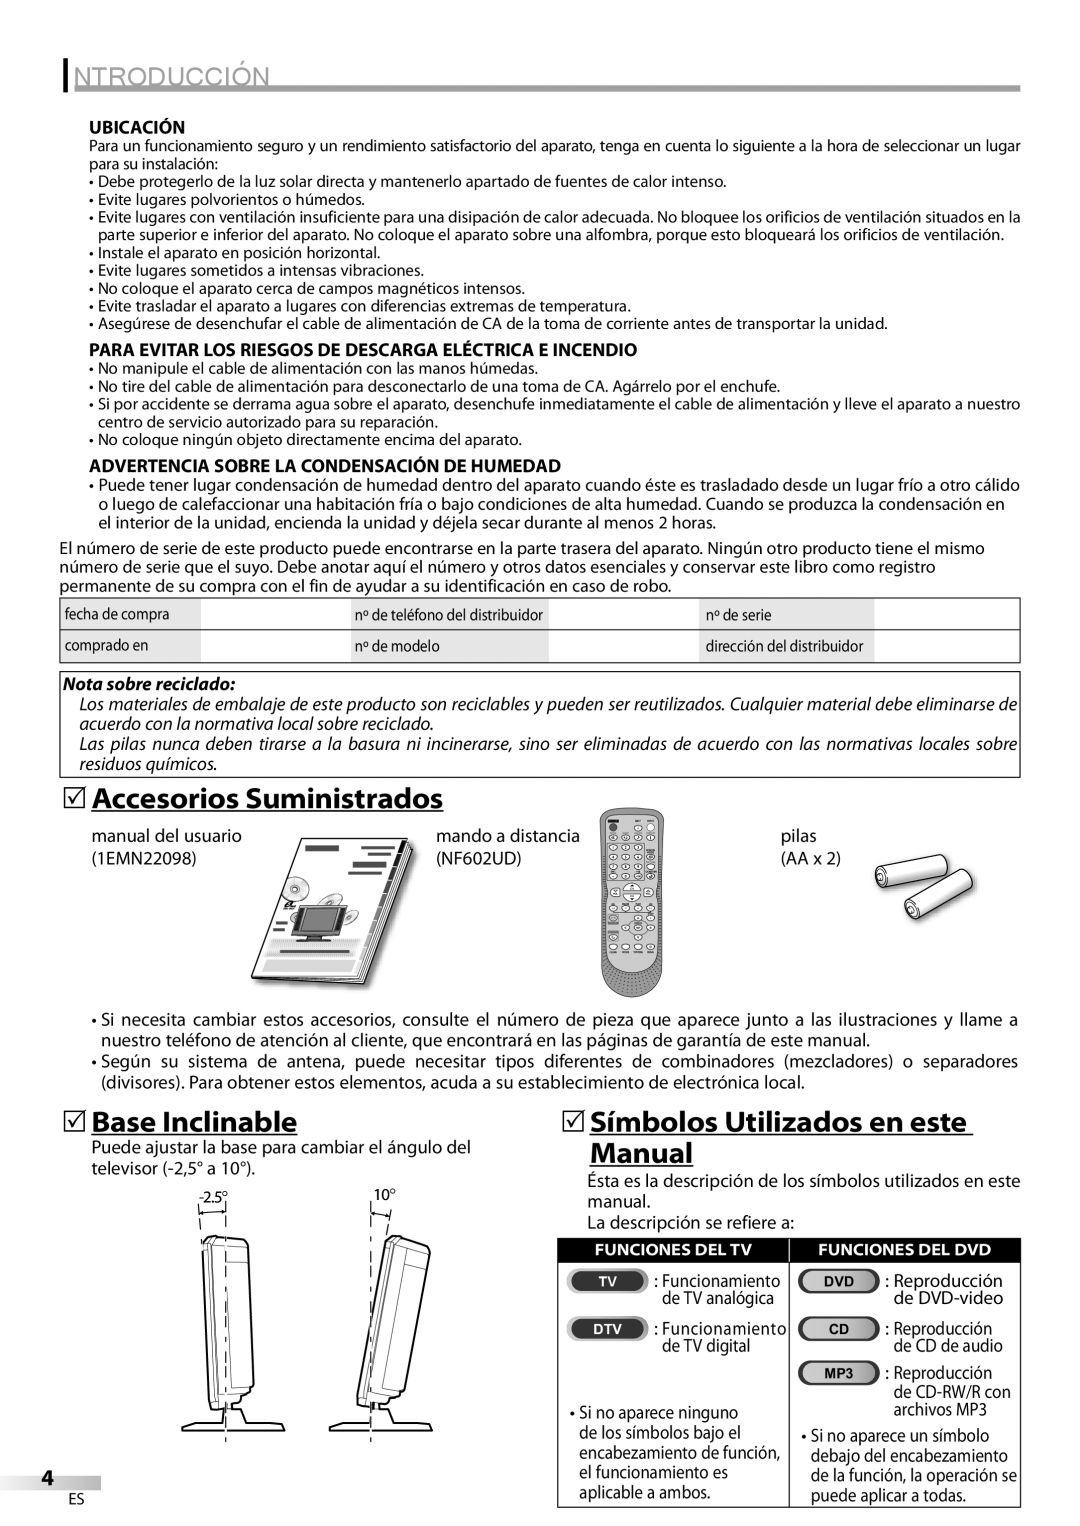 Sylvania LD200SL8 5Accesorios Suministrados, 5Base Inclinable, 5Símbolos Utilizados en este Manual, Introducción 